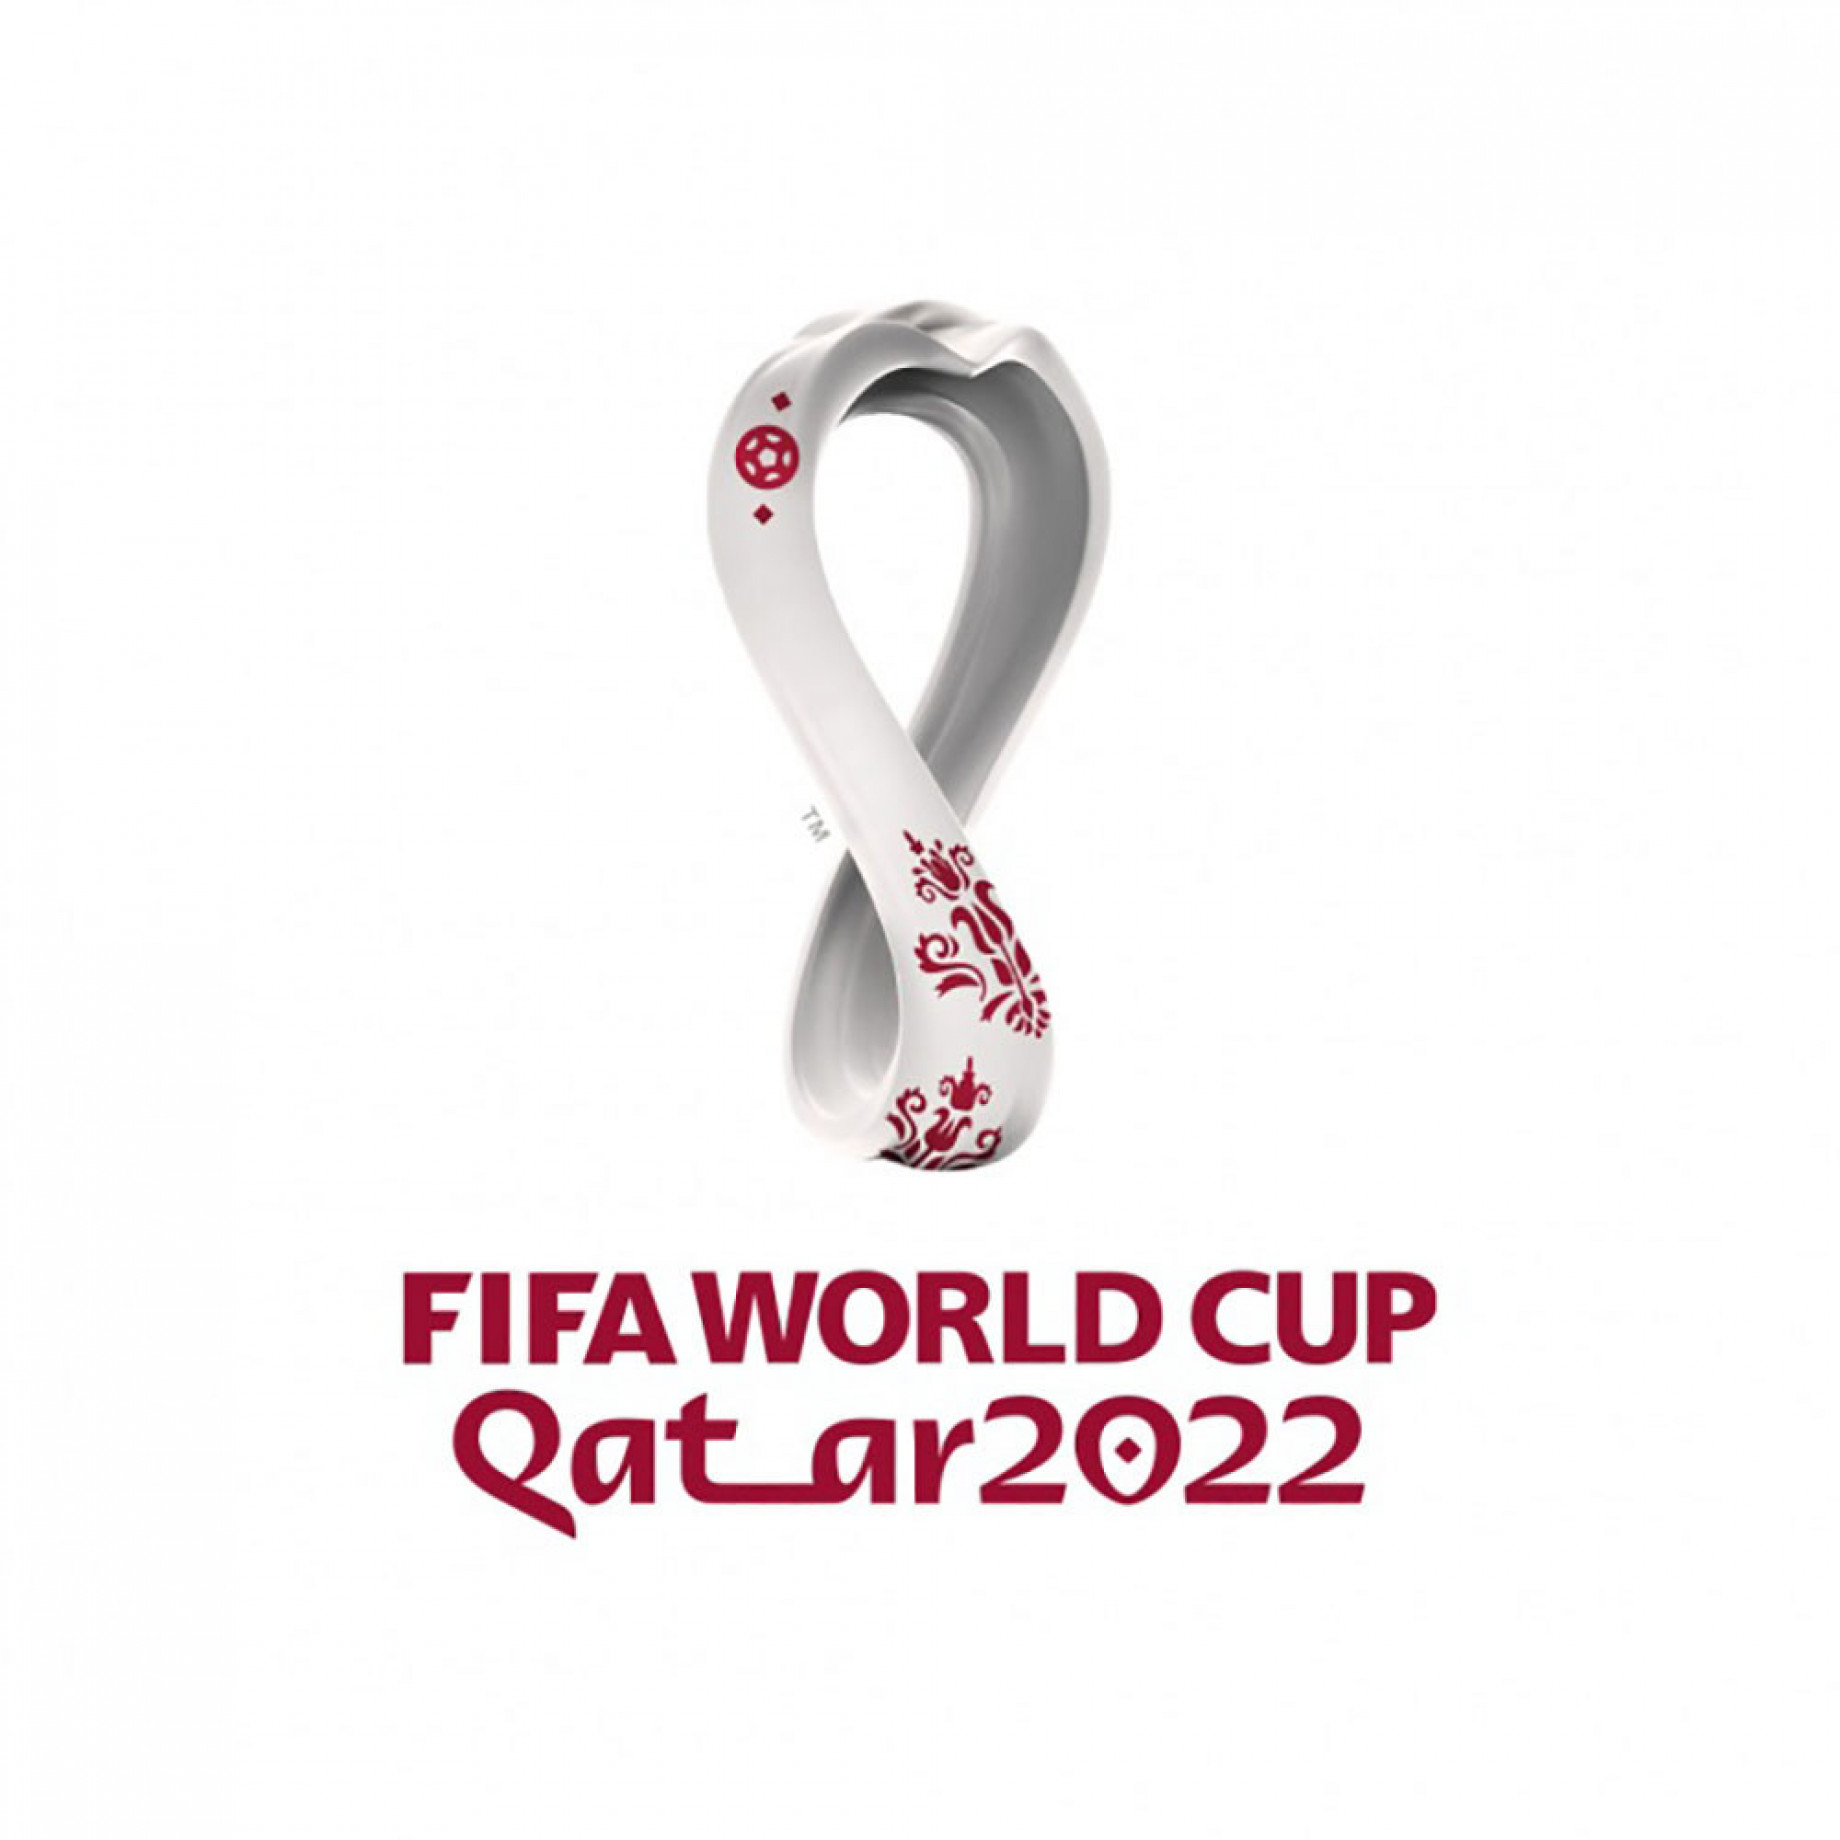 mondiale-qatar-2022-logo-quadrato-wiki-commons.jpg